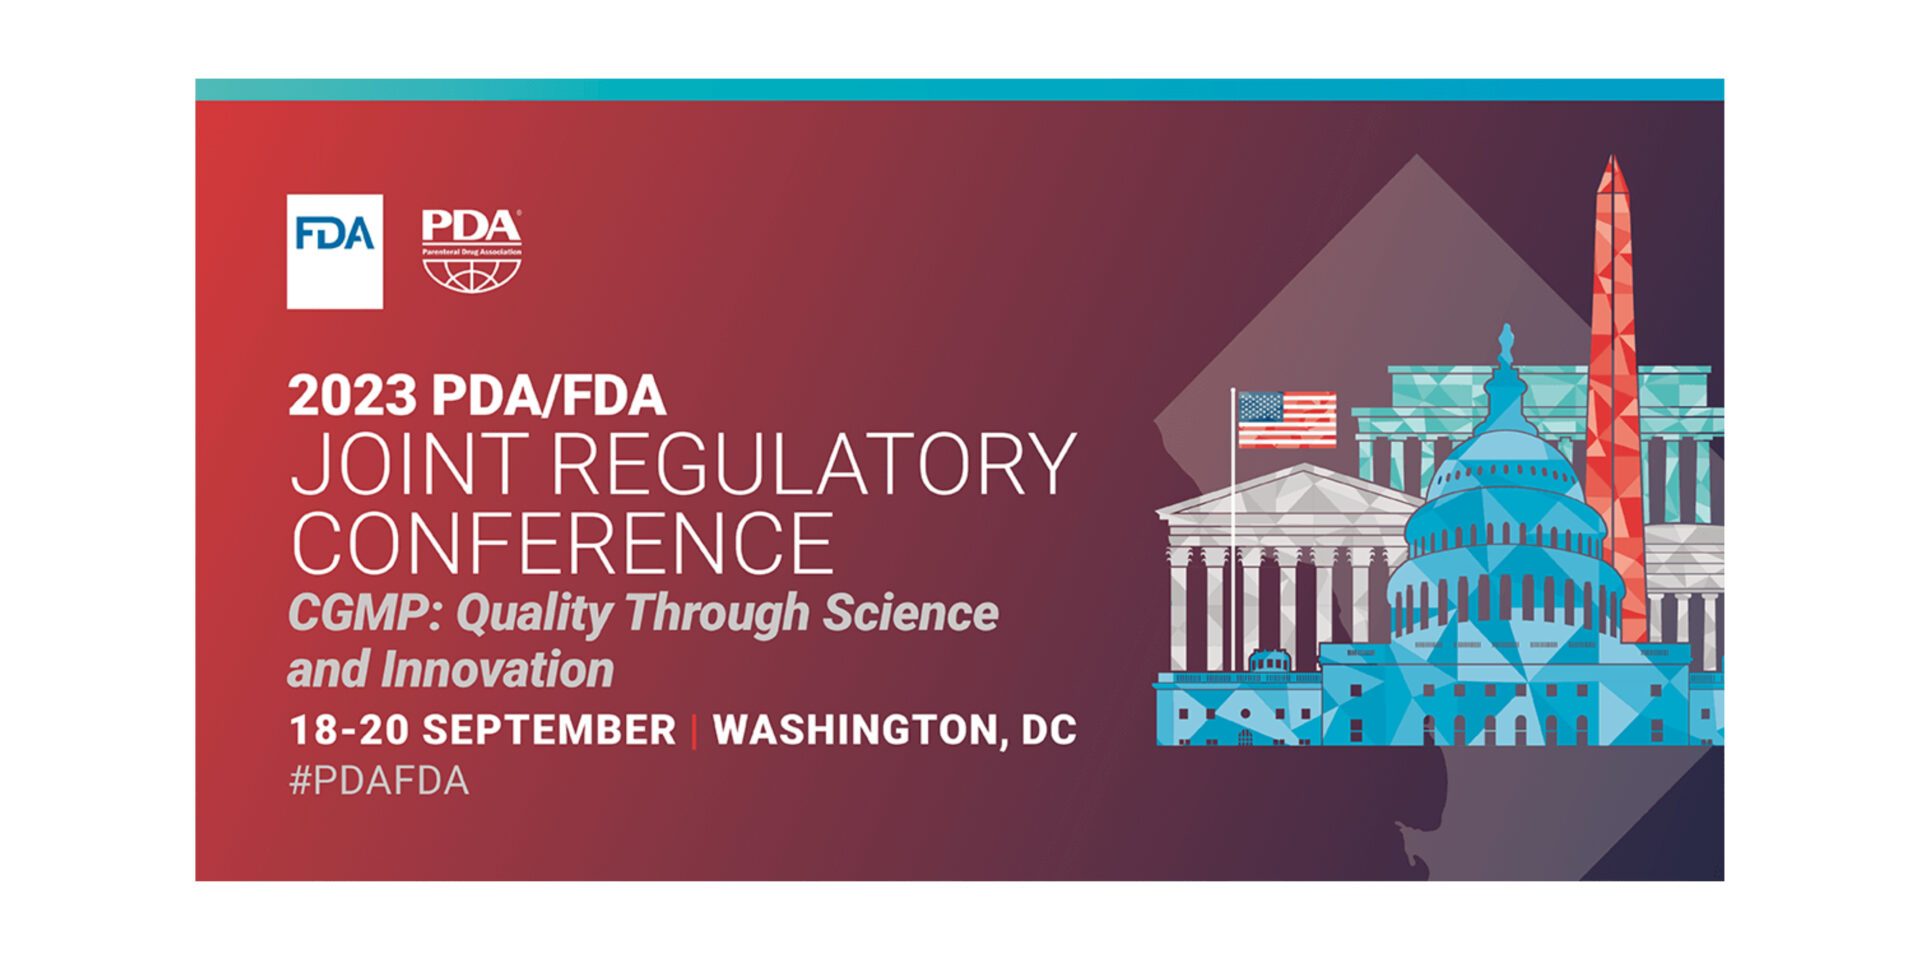 BioCentriq Speaking at PDA/FDA Joint Regulatory Conference